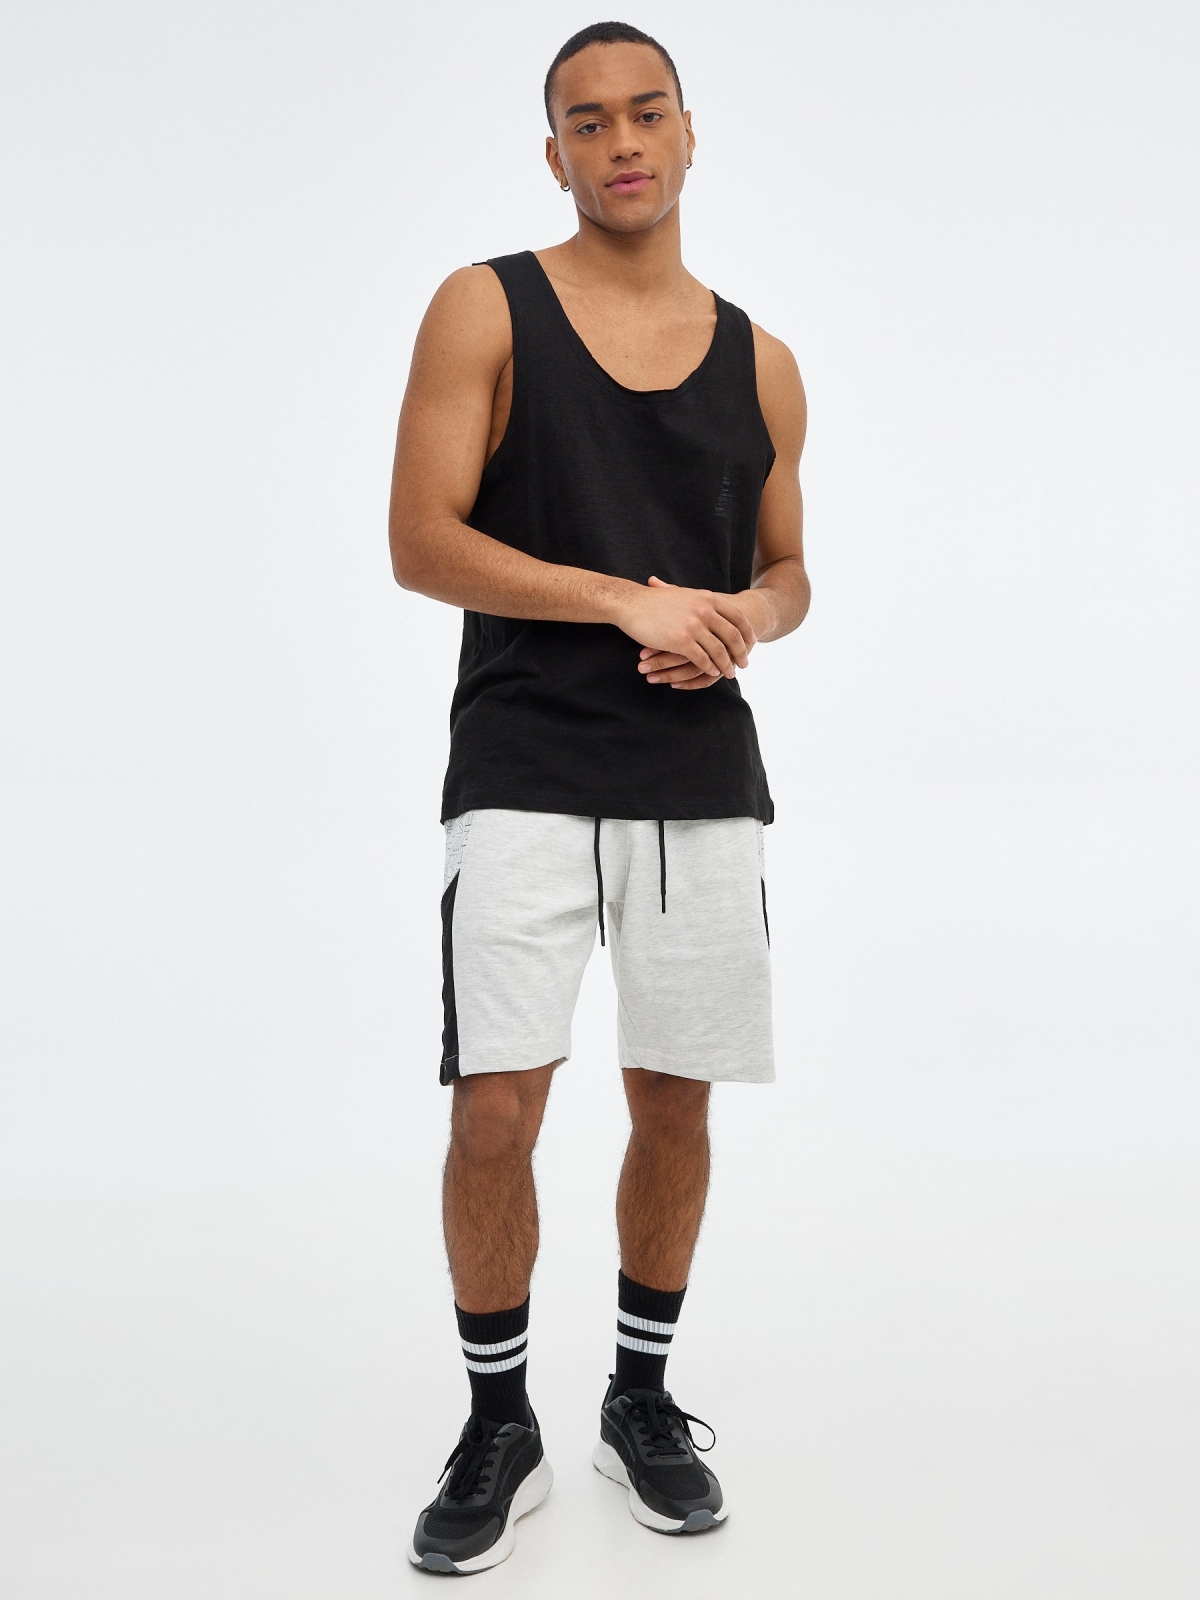 Bermuda jogger shorts with side band light grey vigore front view